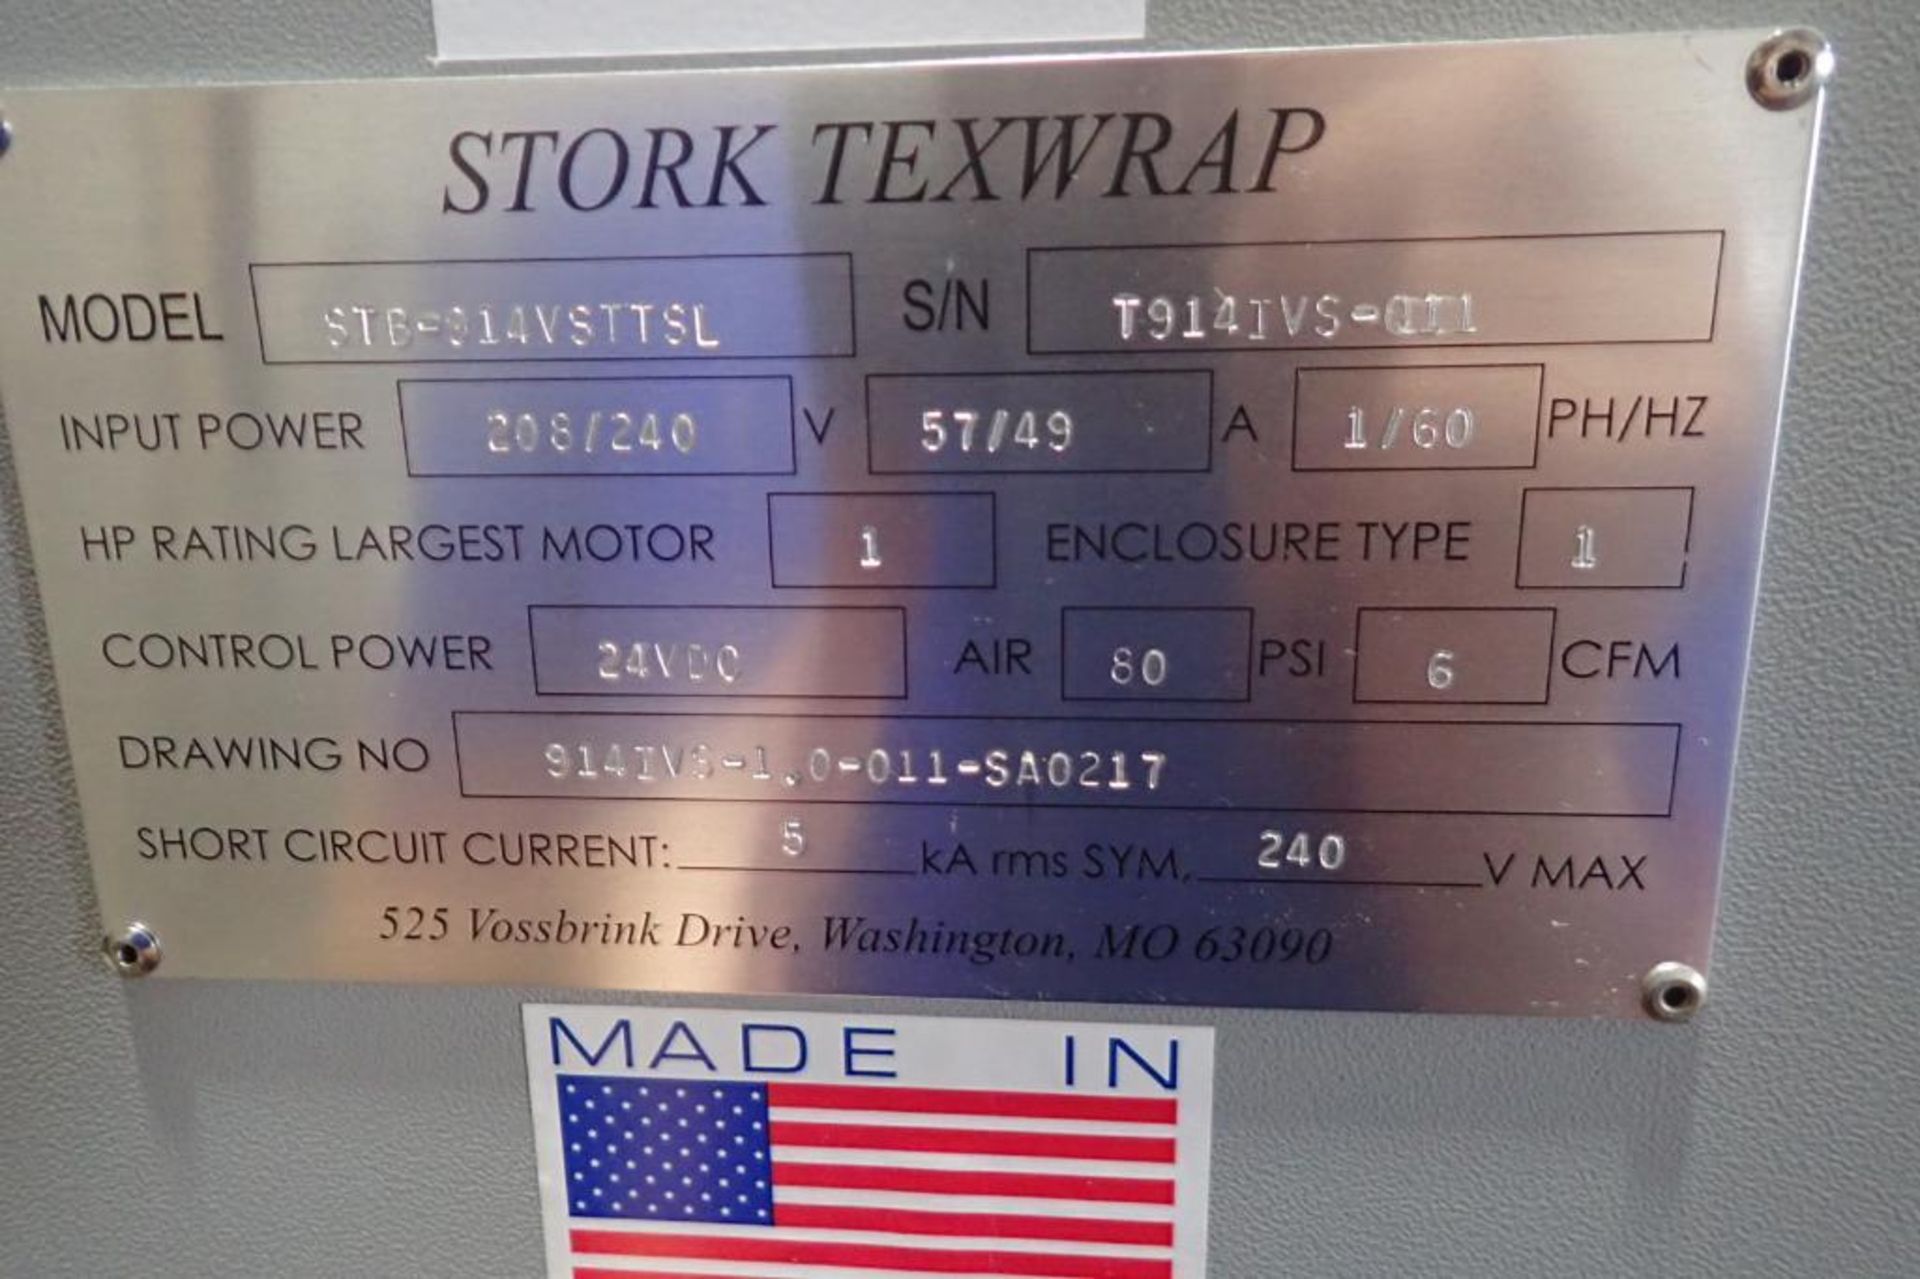 Stork texwrap TTS-TVS over-wrapper, Model STB-914VSTTSL, T914IVS-011, 16 in. tall vertical seal - Image 20 of 32